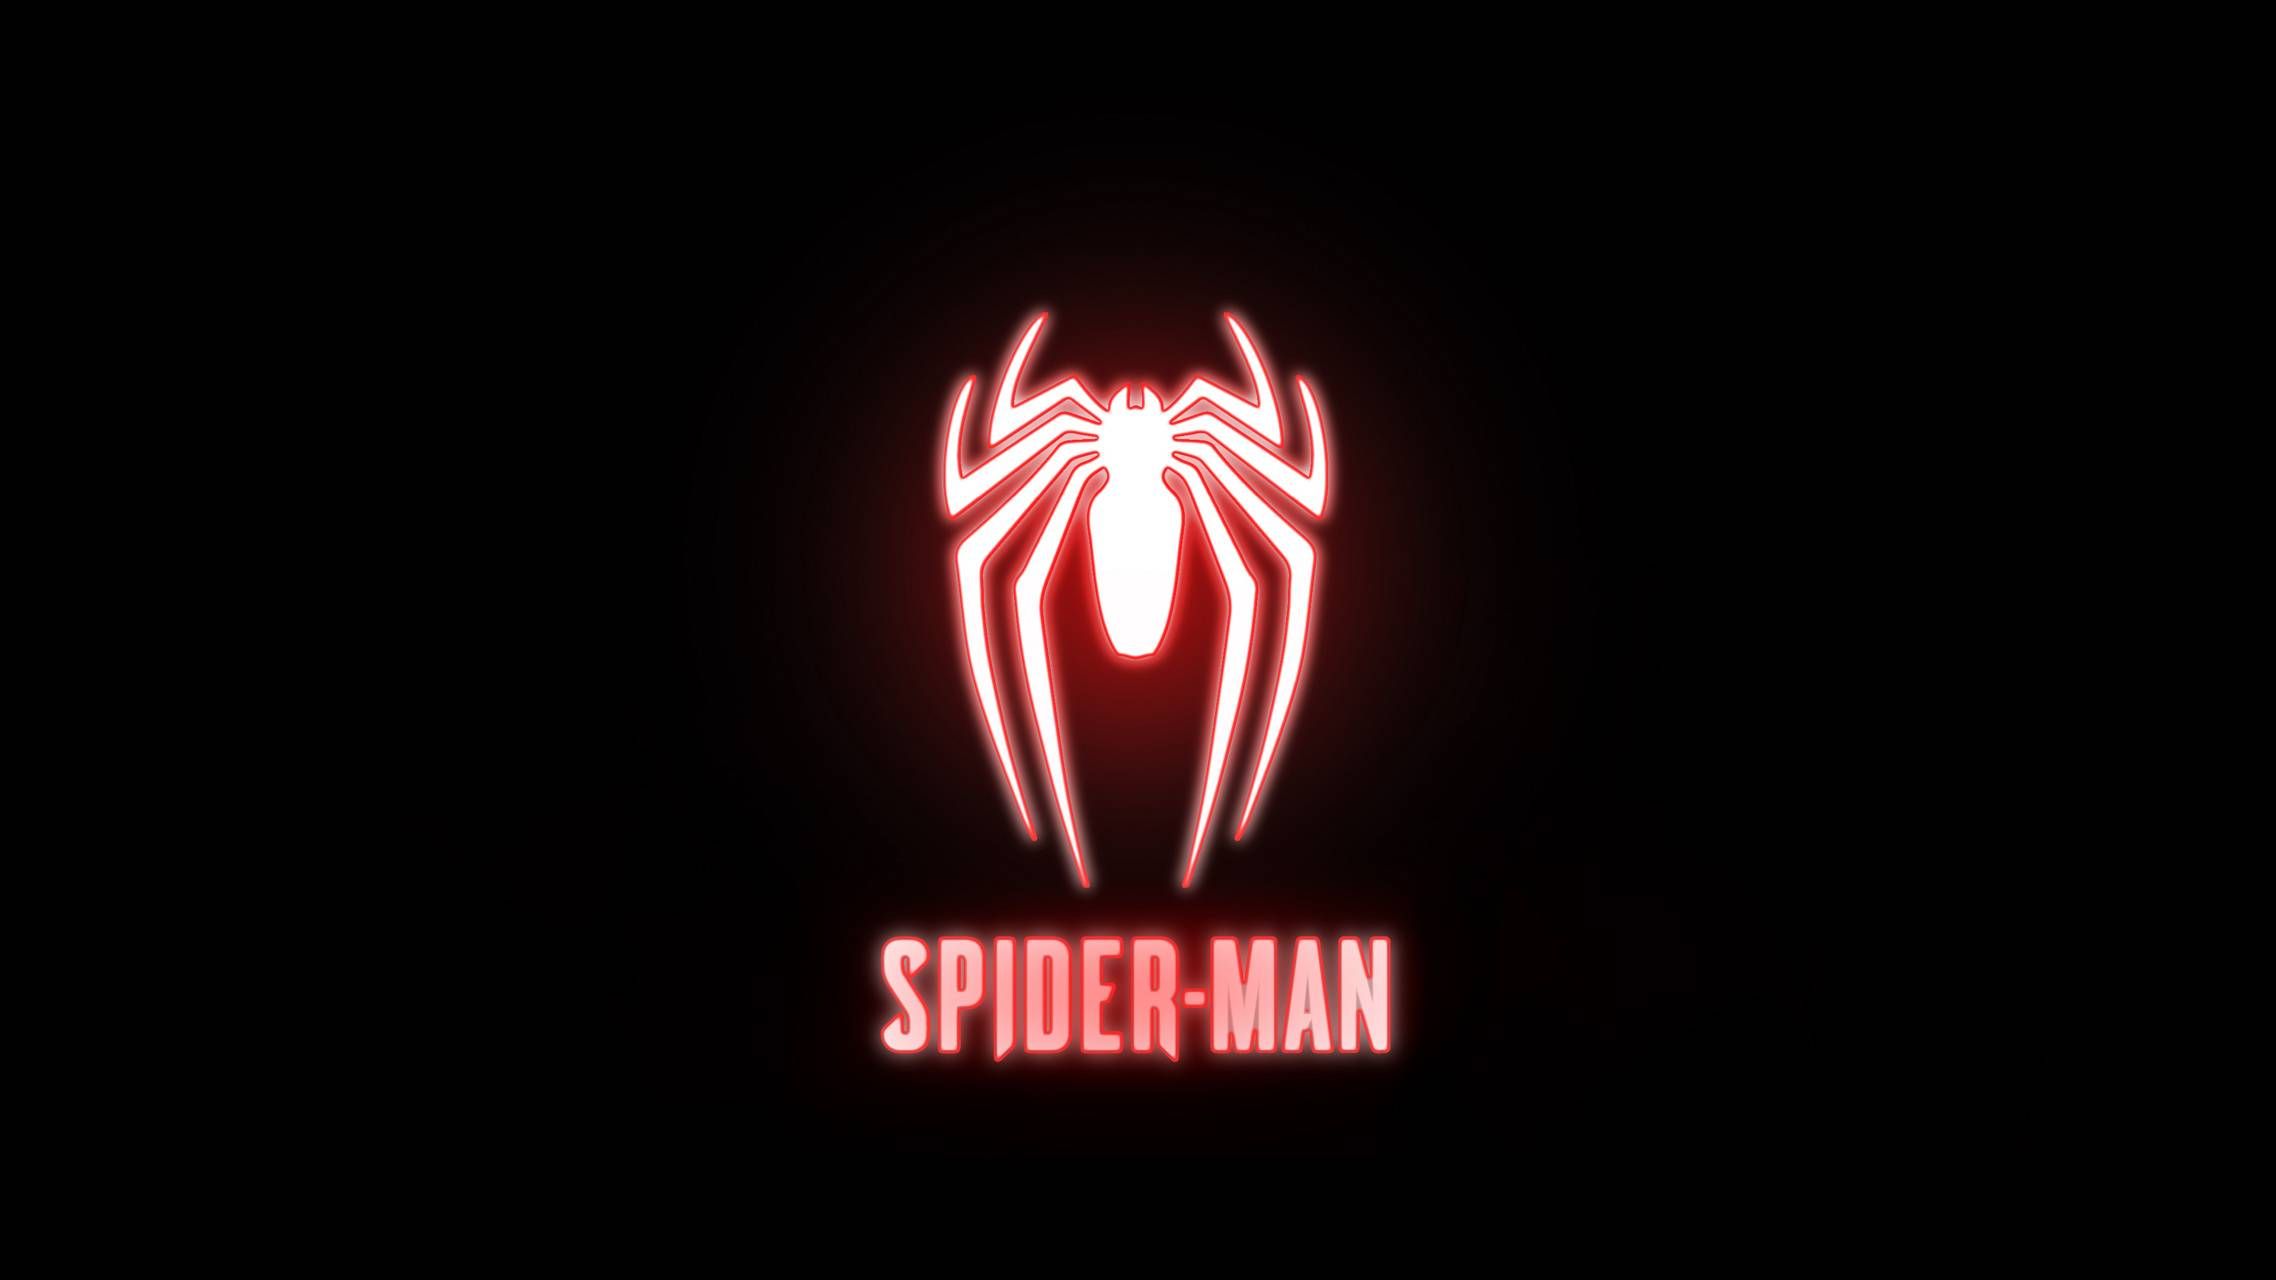 Spiderman Ps4 wallpaper